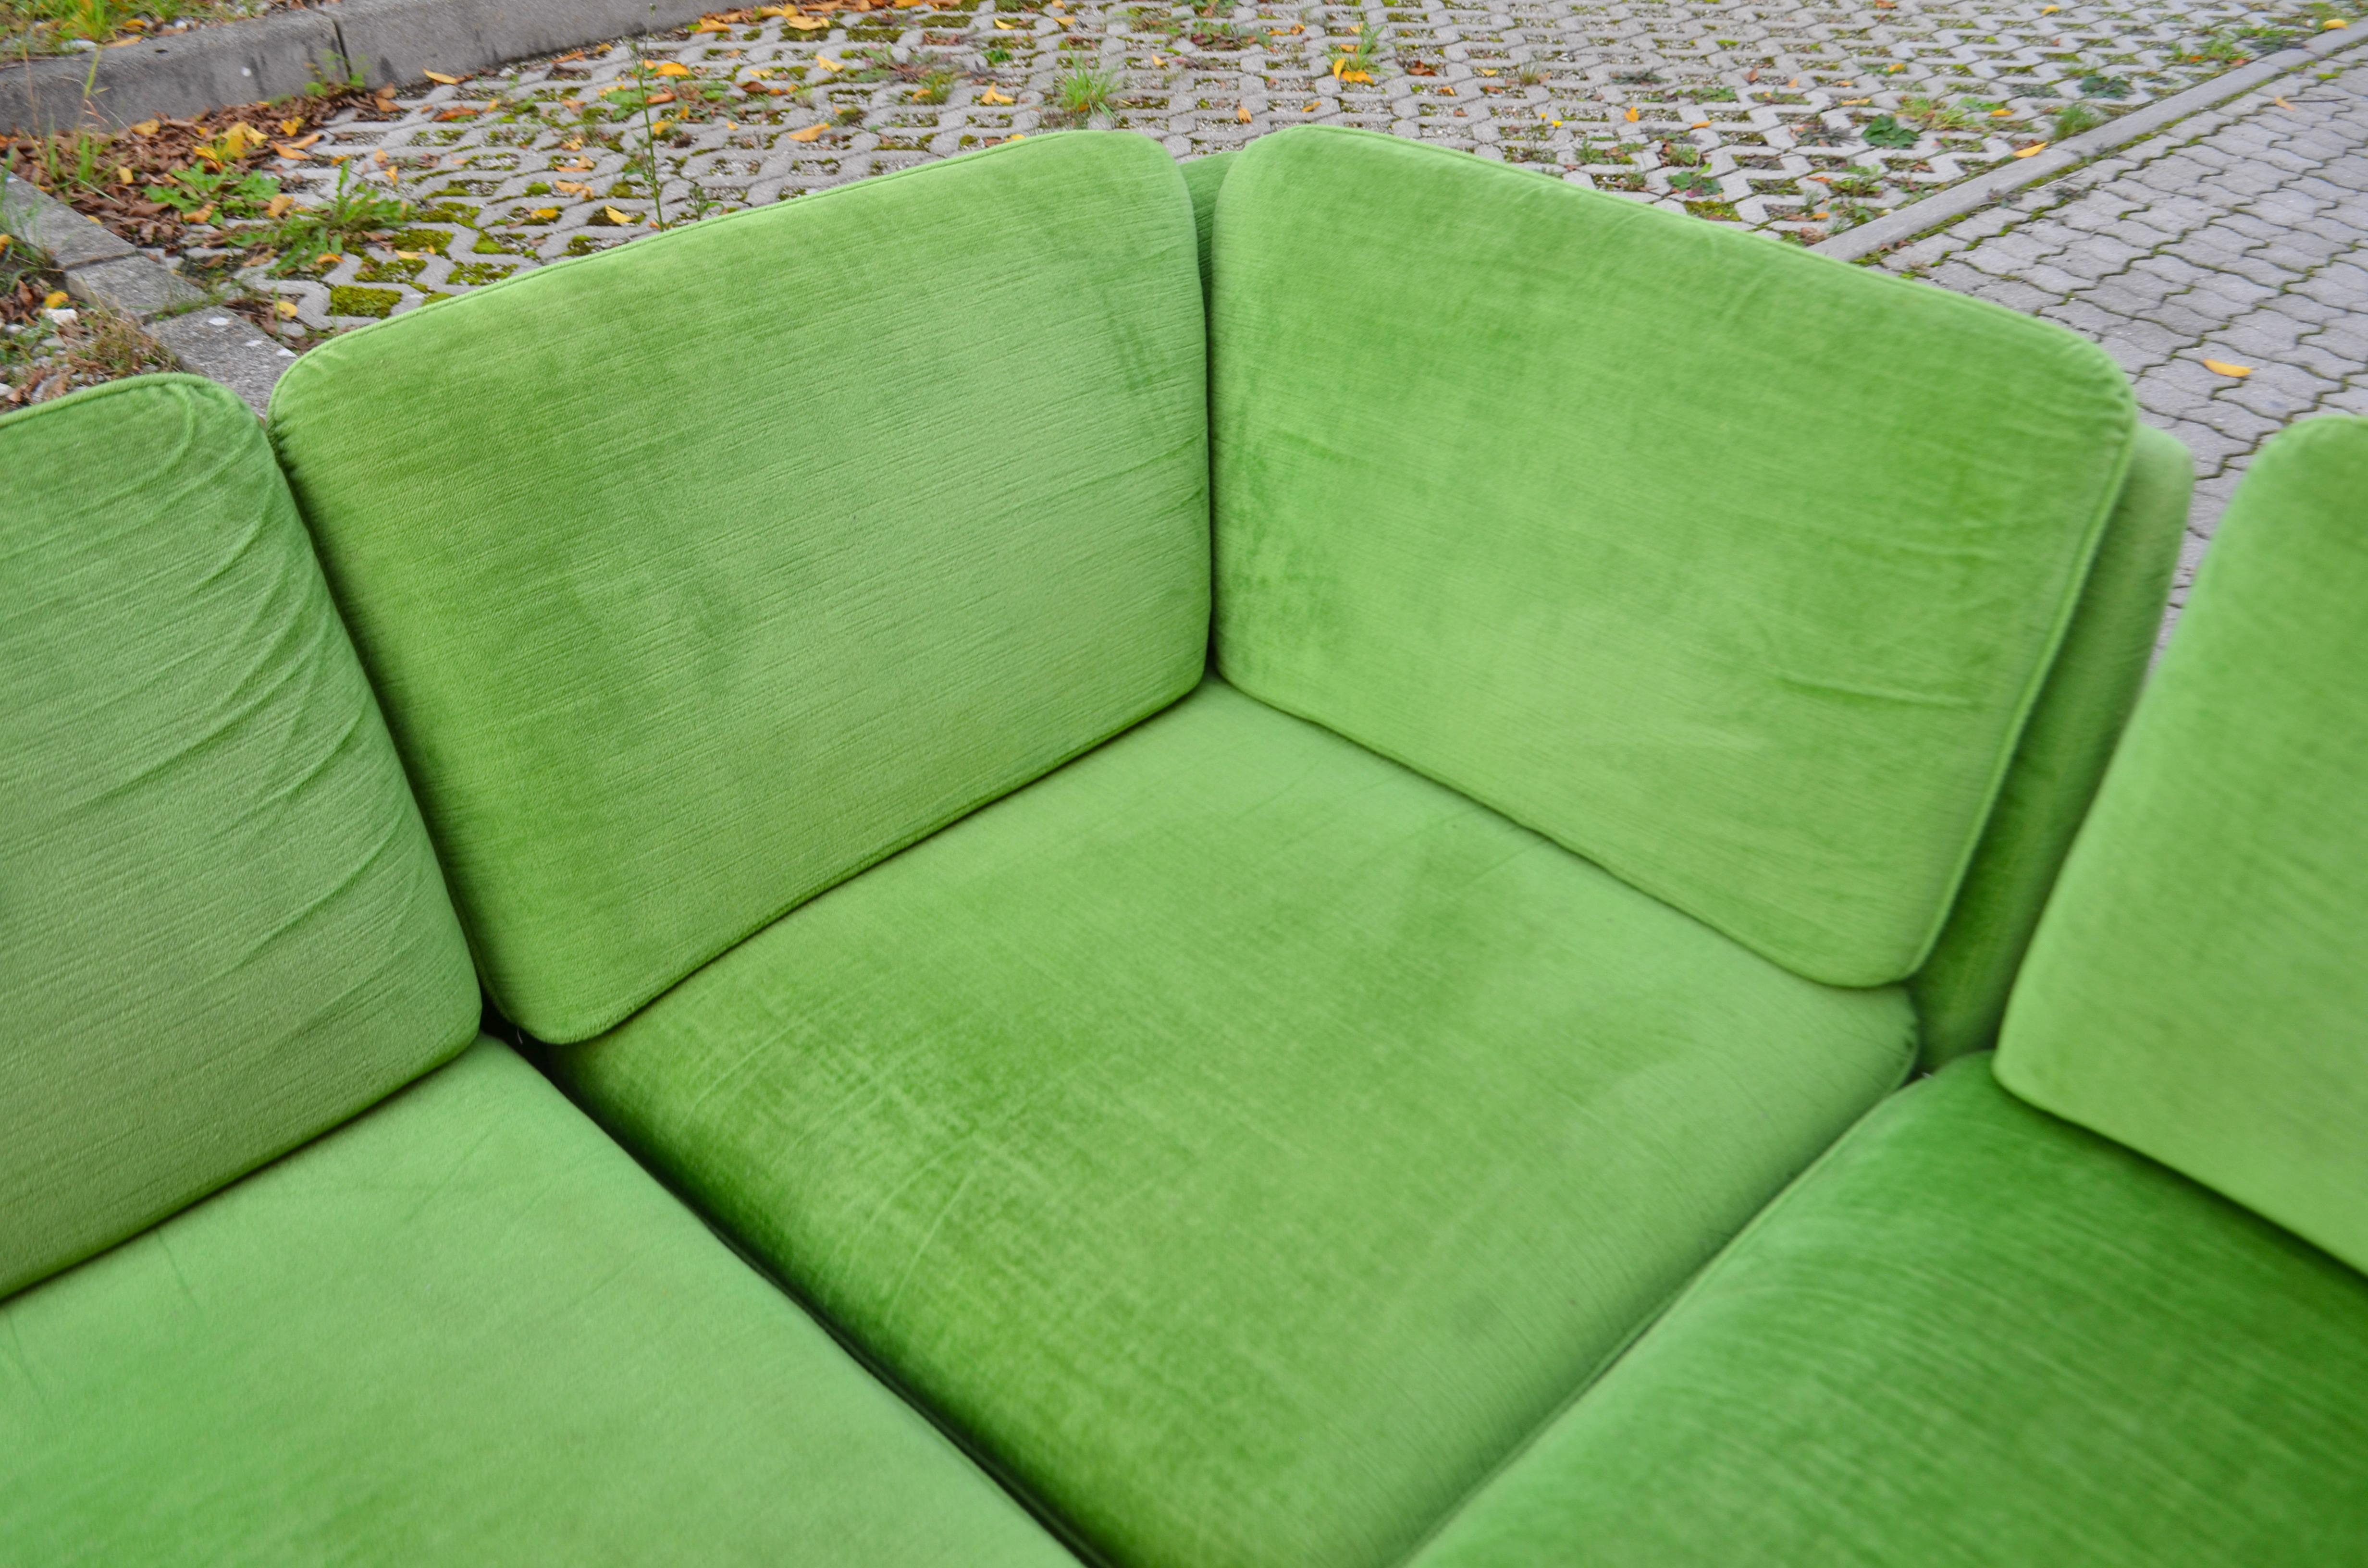 COR LÜBKE & ROLF Vintage Modular limegreen Living Room Suite Sectional Sofa  For Sale 2